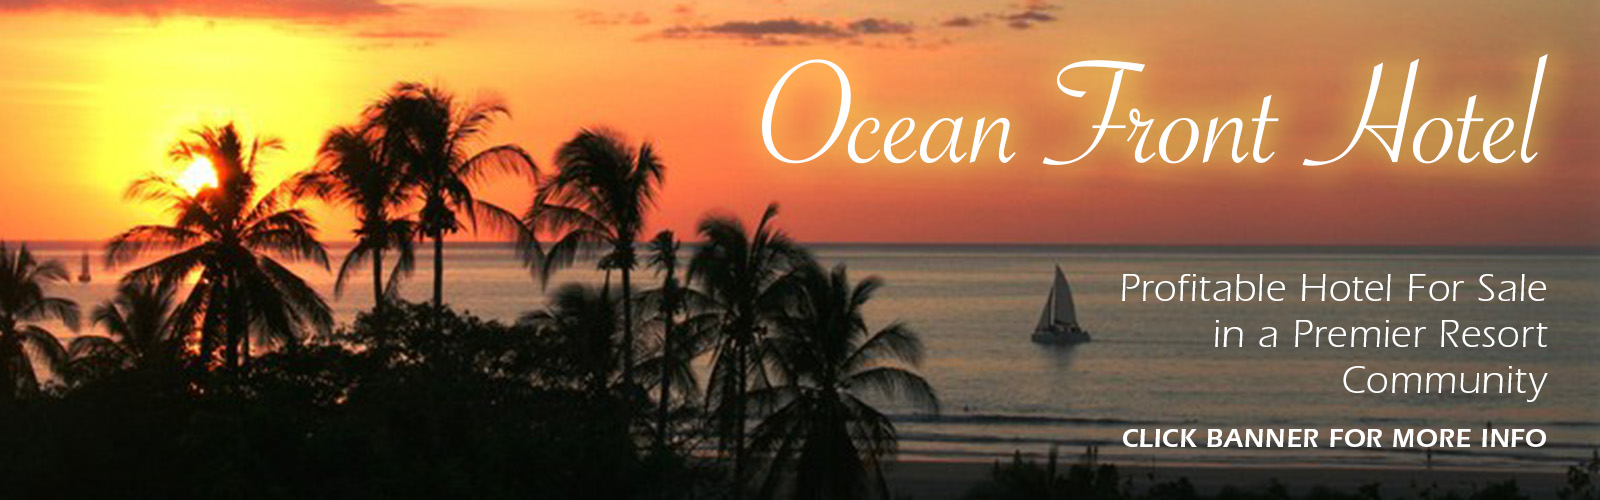 Ocean Front Hotel.jpg